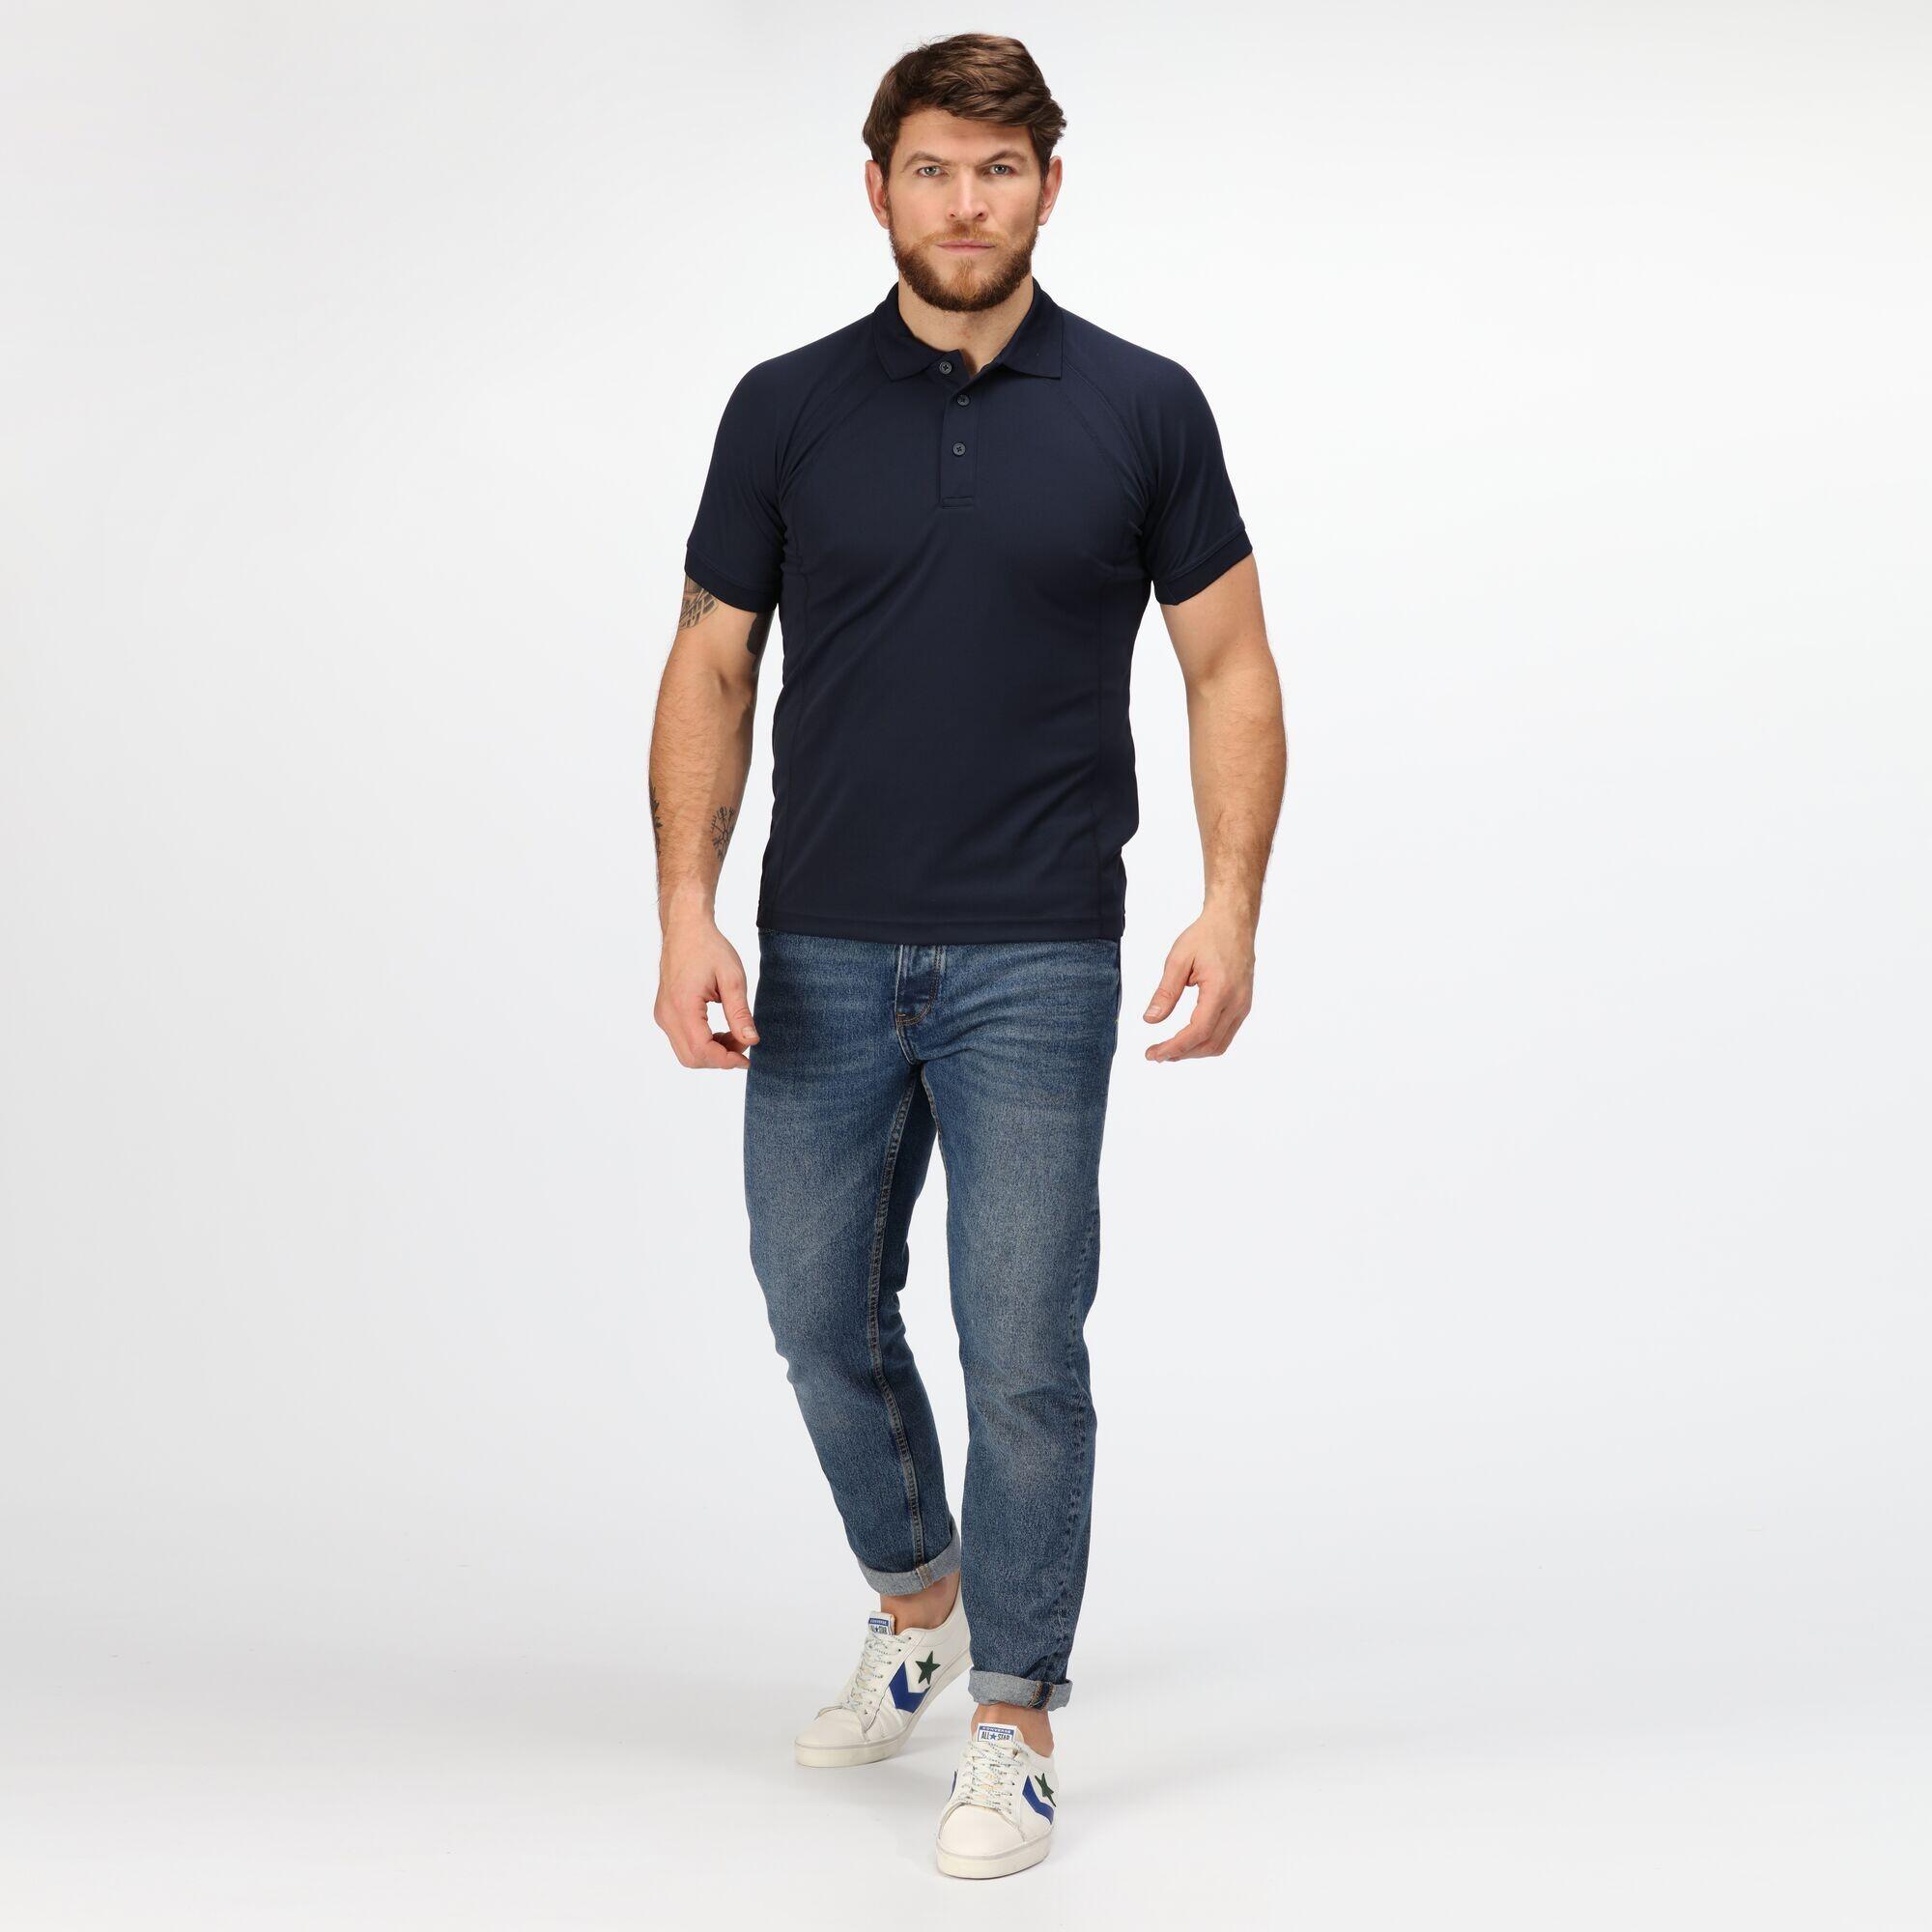 Hardwear Mens Coolweave Short Sleeve Polo Shirt (Navy) 4/5